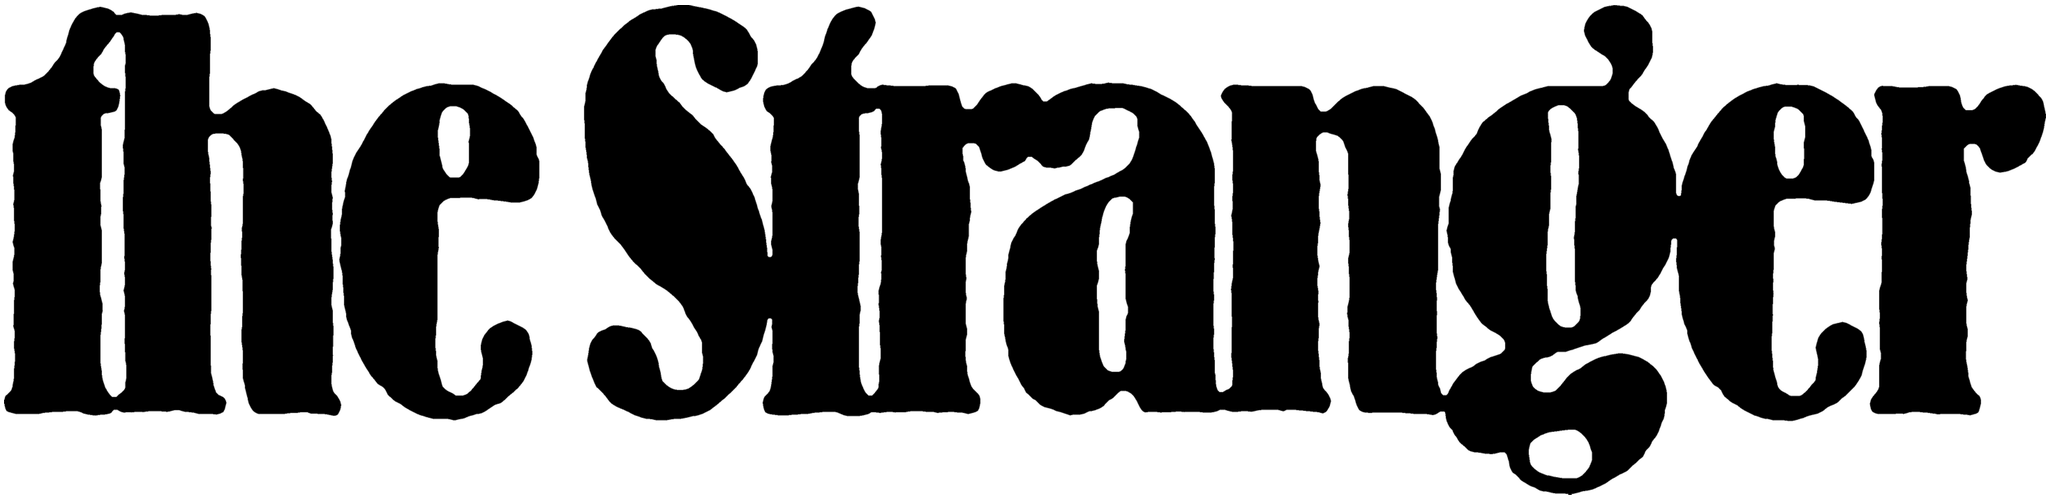 Index Newspapers (The Stranger / Portland Mercury) logo